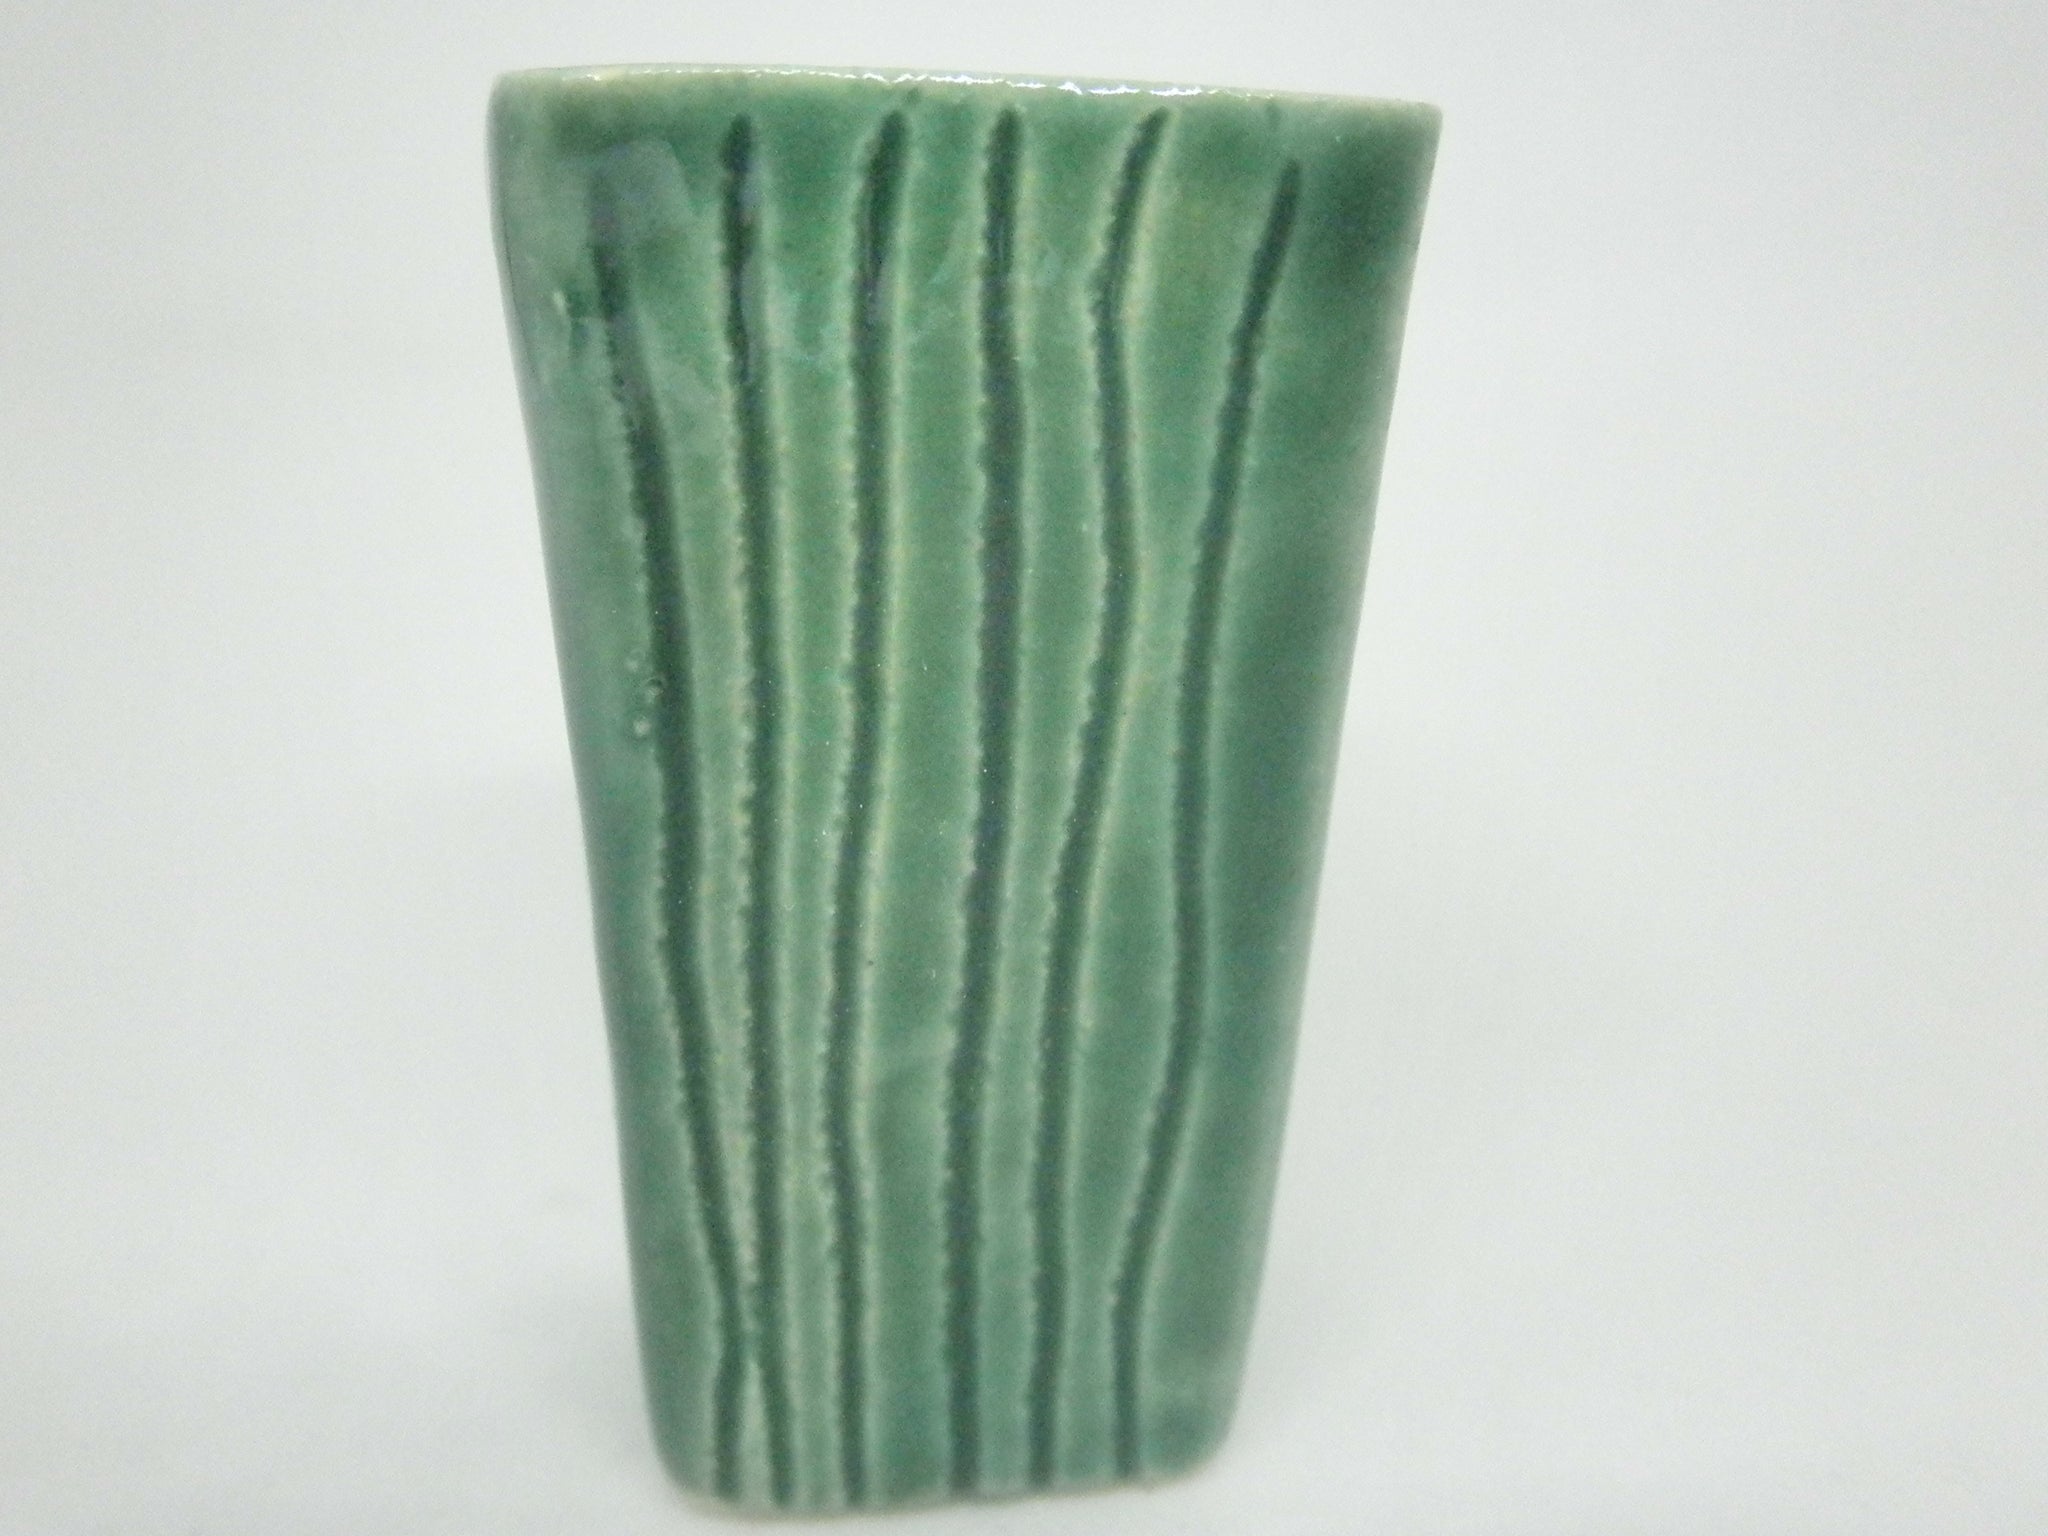 Miniature modern tall planter - stripes green